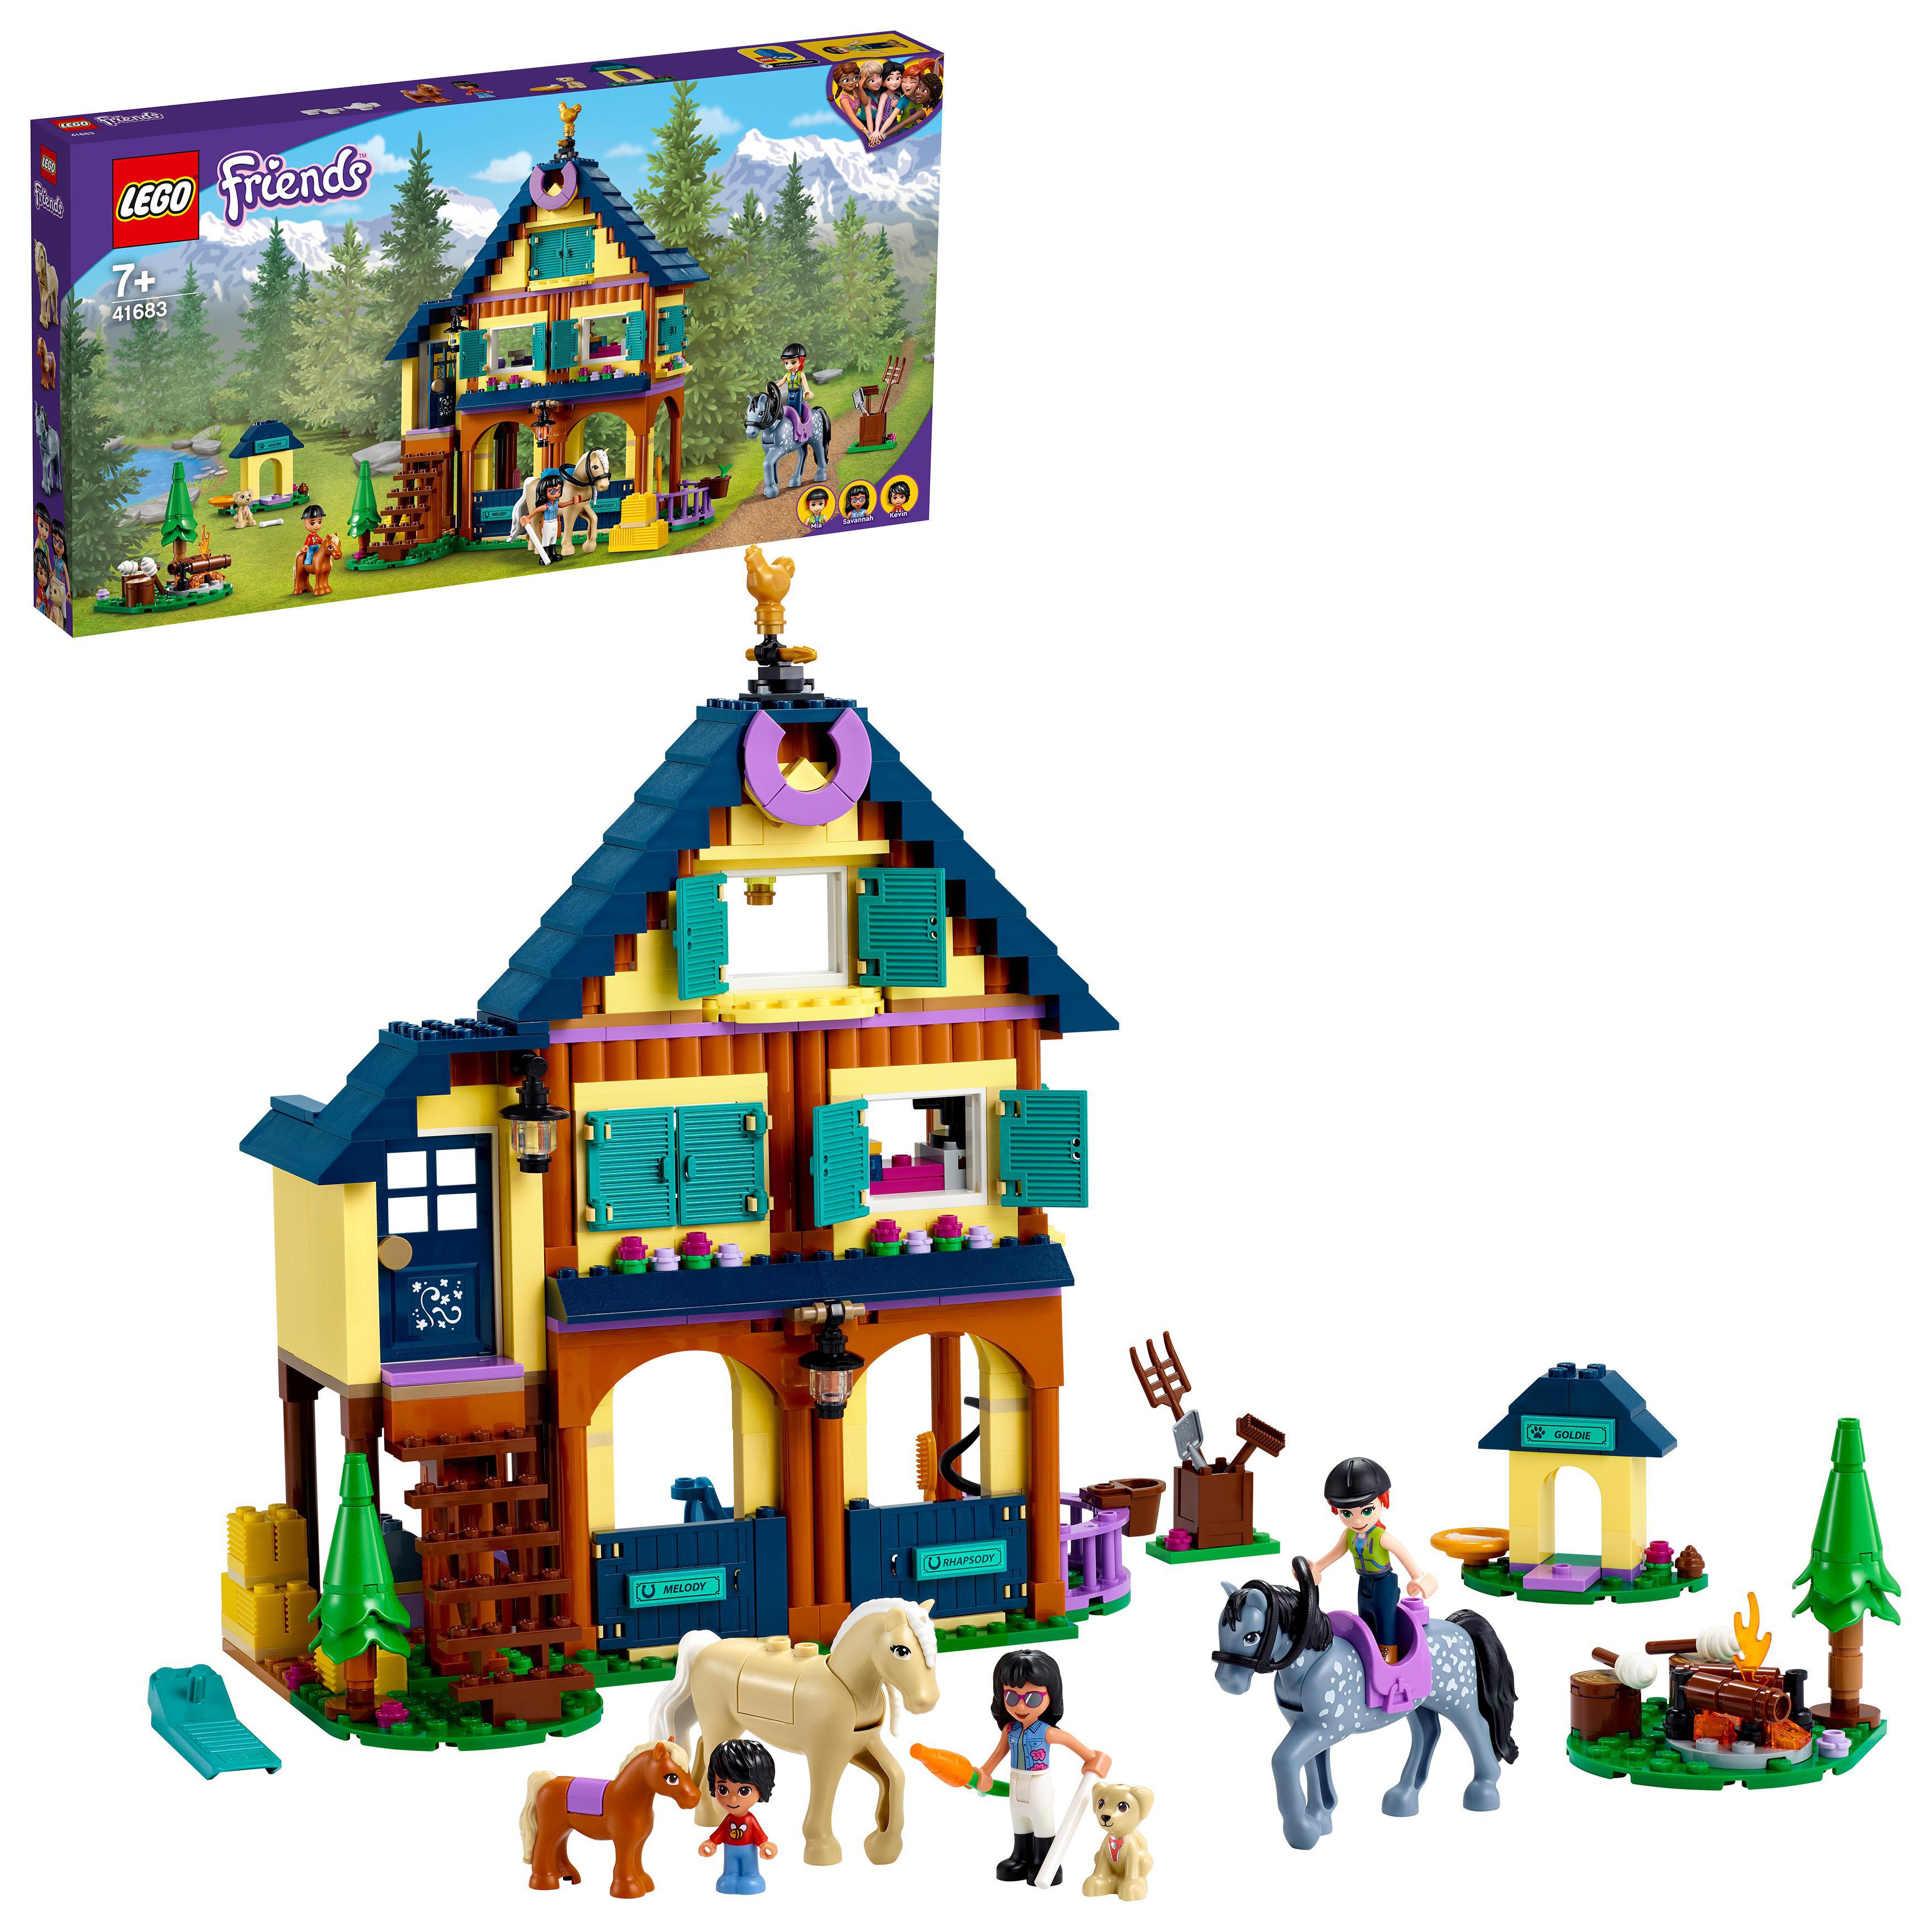 LEGO Friends - Forest Horseback Riding Center (41683)